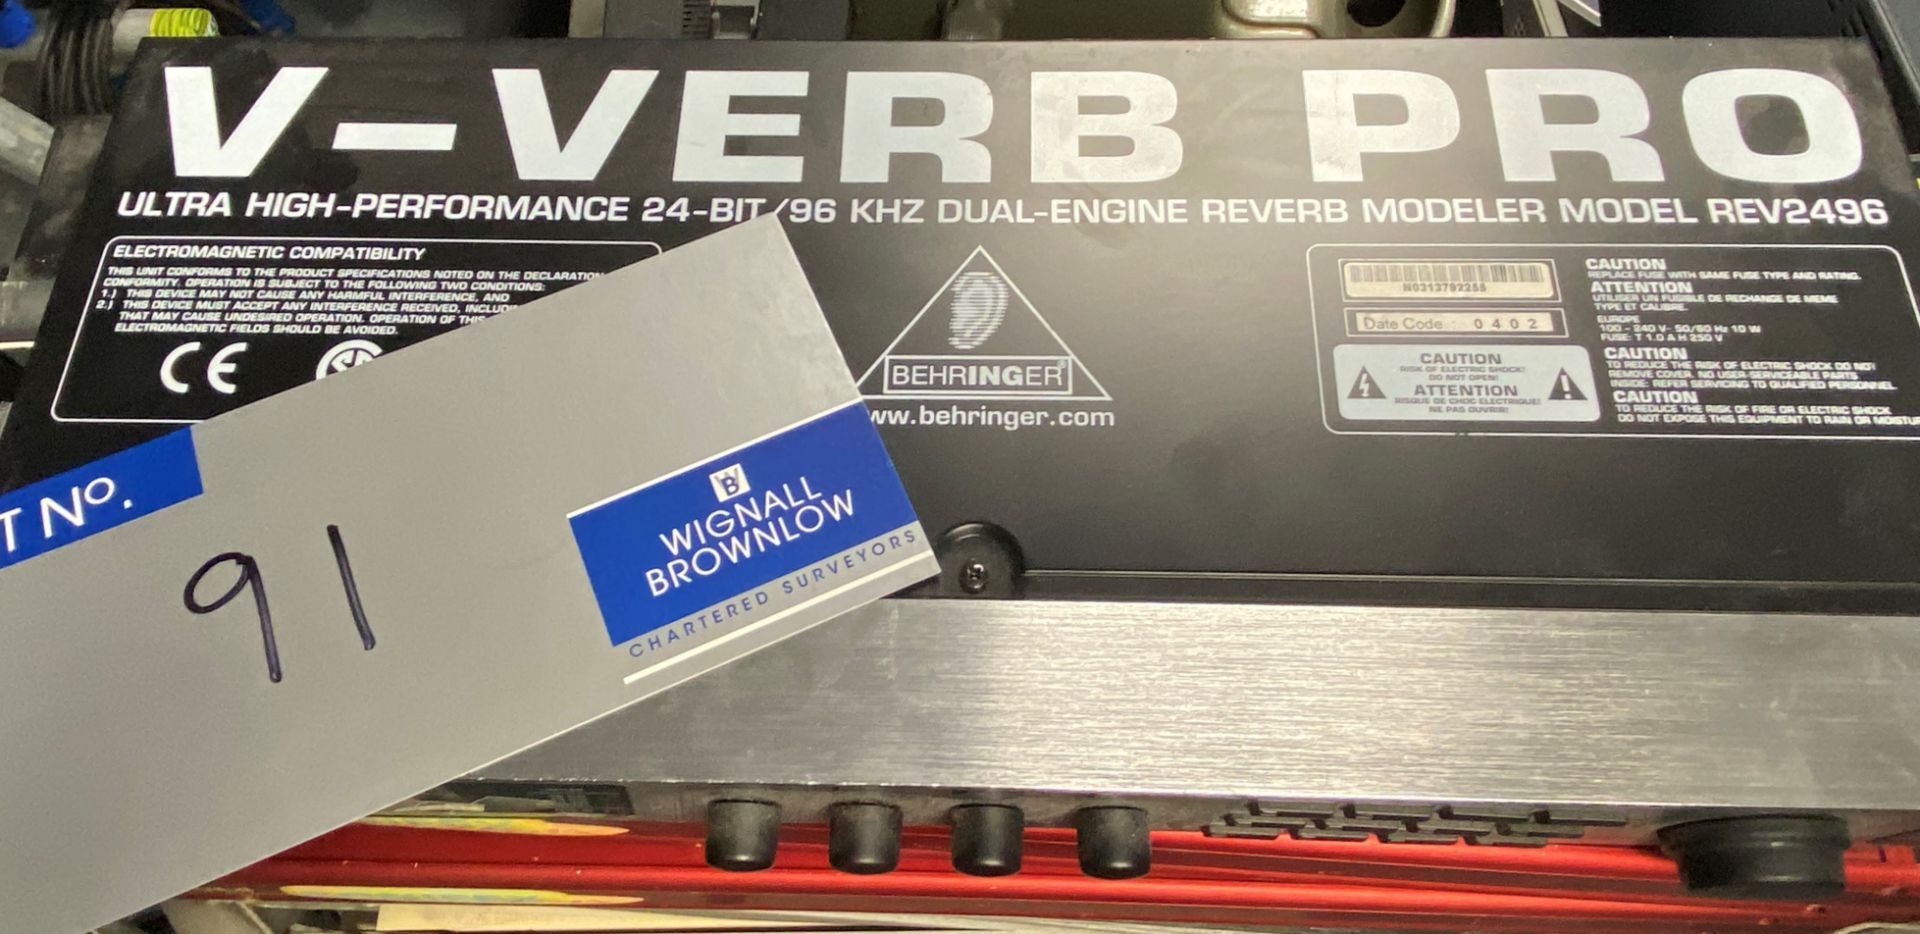 A Berhinger V-VERB PRO REV2496 Ultra High Performance 24-BIT/96kHz Dual-Engine Reverb Modeler ( - Image 2 of 2